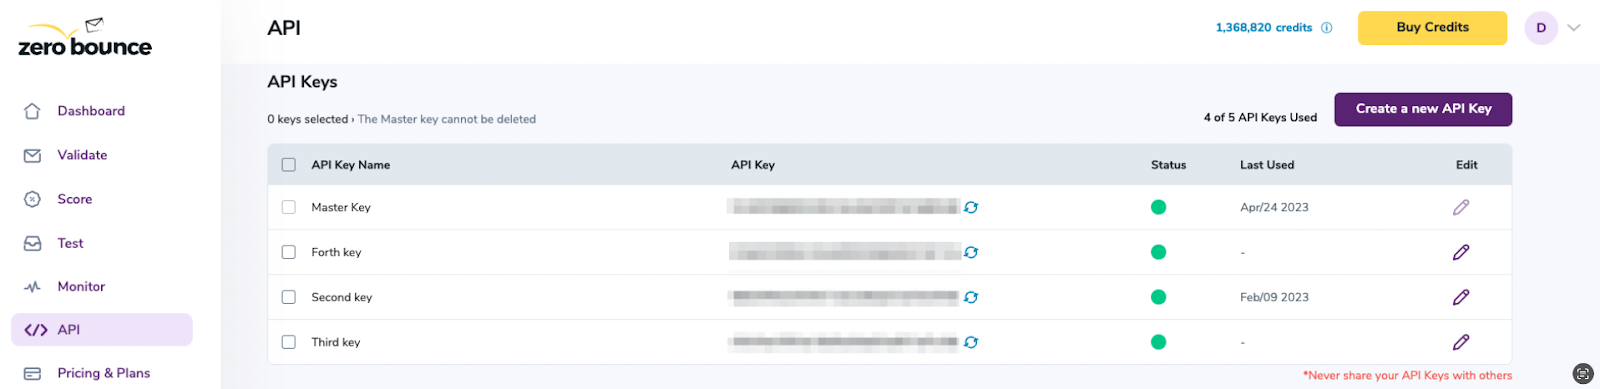 ZeroBounce API Key interface screenshot